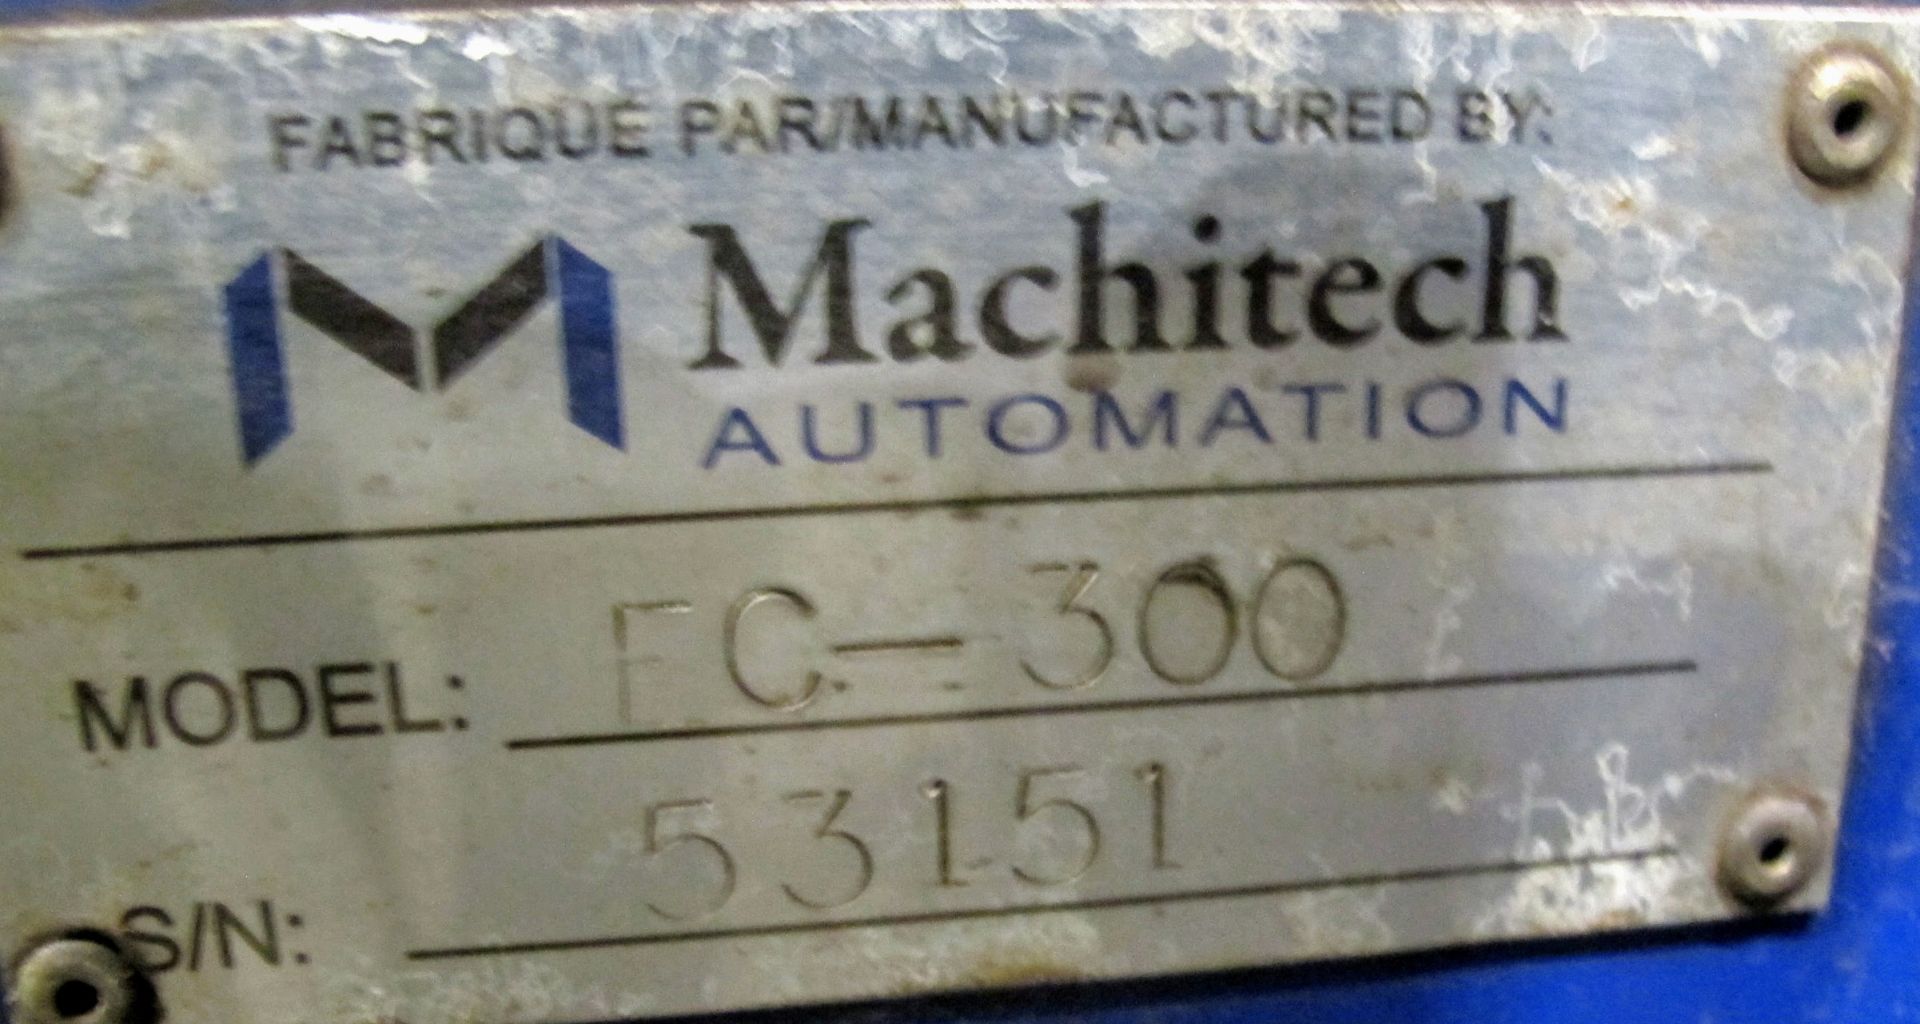 MACHITECH EC-300 PLASMA CUTTING TABLE, S/N 53151, CNC CONTROL, HYPERTHERM POWERMAX 125 POWER SUPPLY, - Image 16 of 17